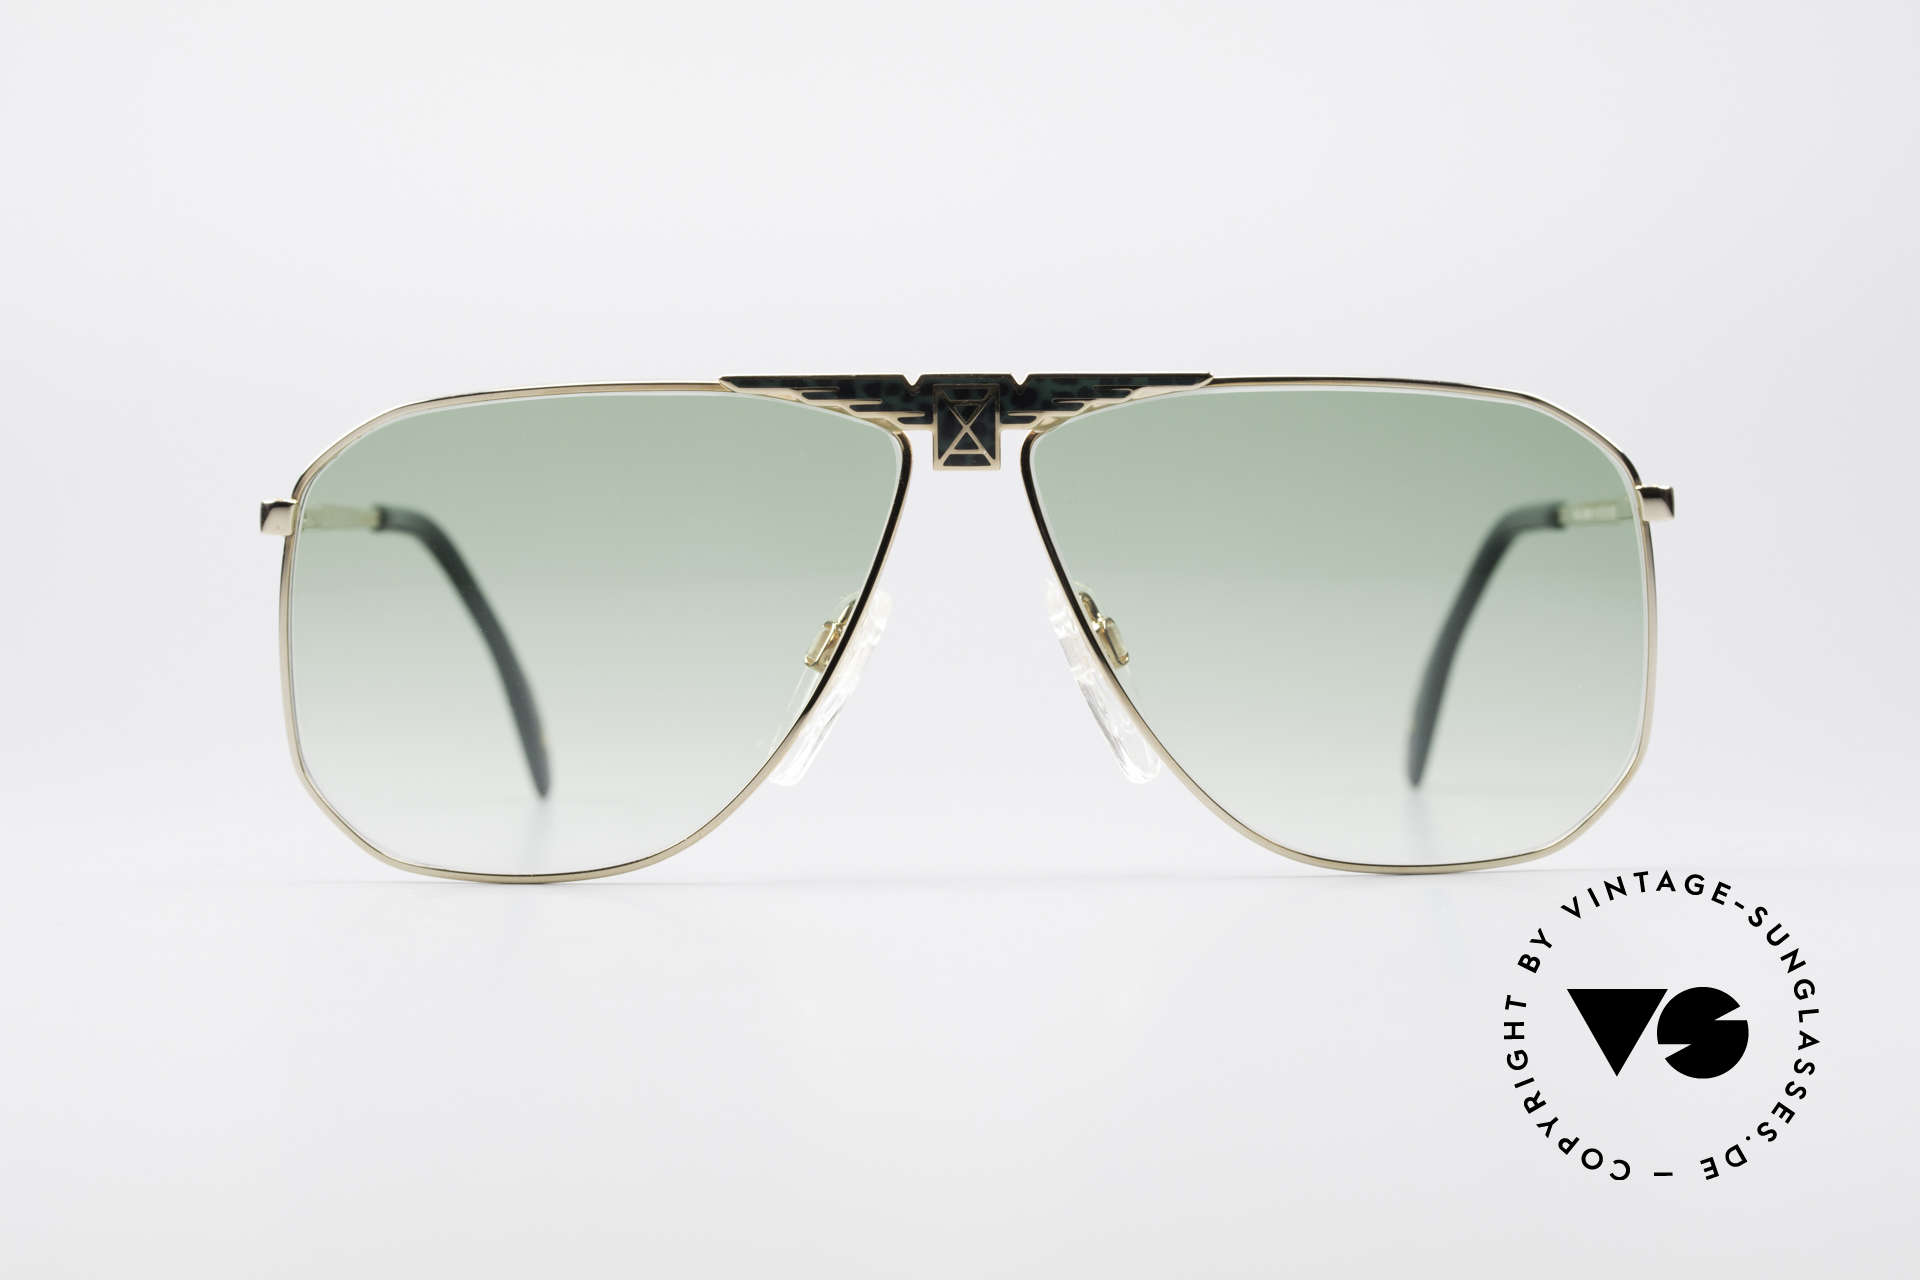 Longines 0155 80's Designer Sunglasses, precious frame with spring hinges (1st class comfort), Made for Men